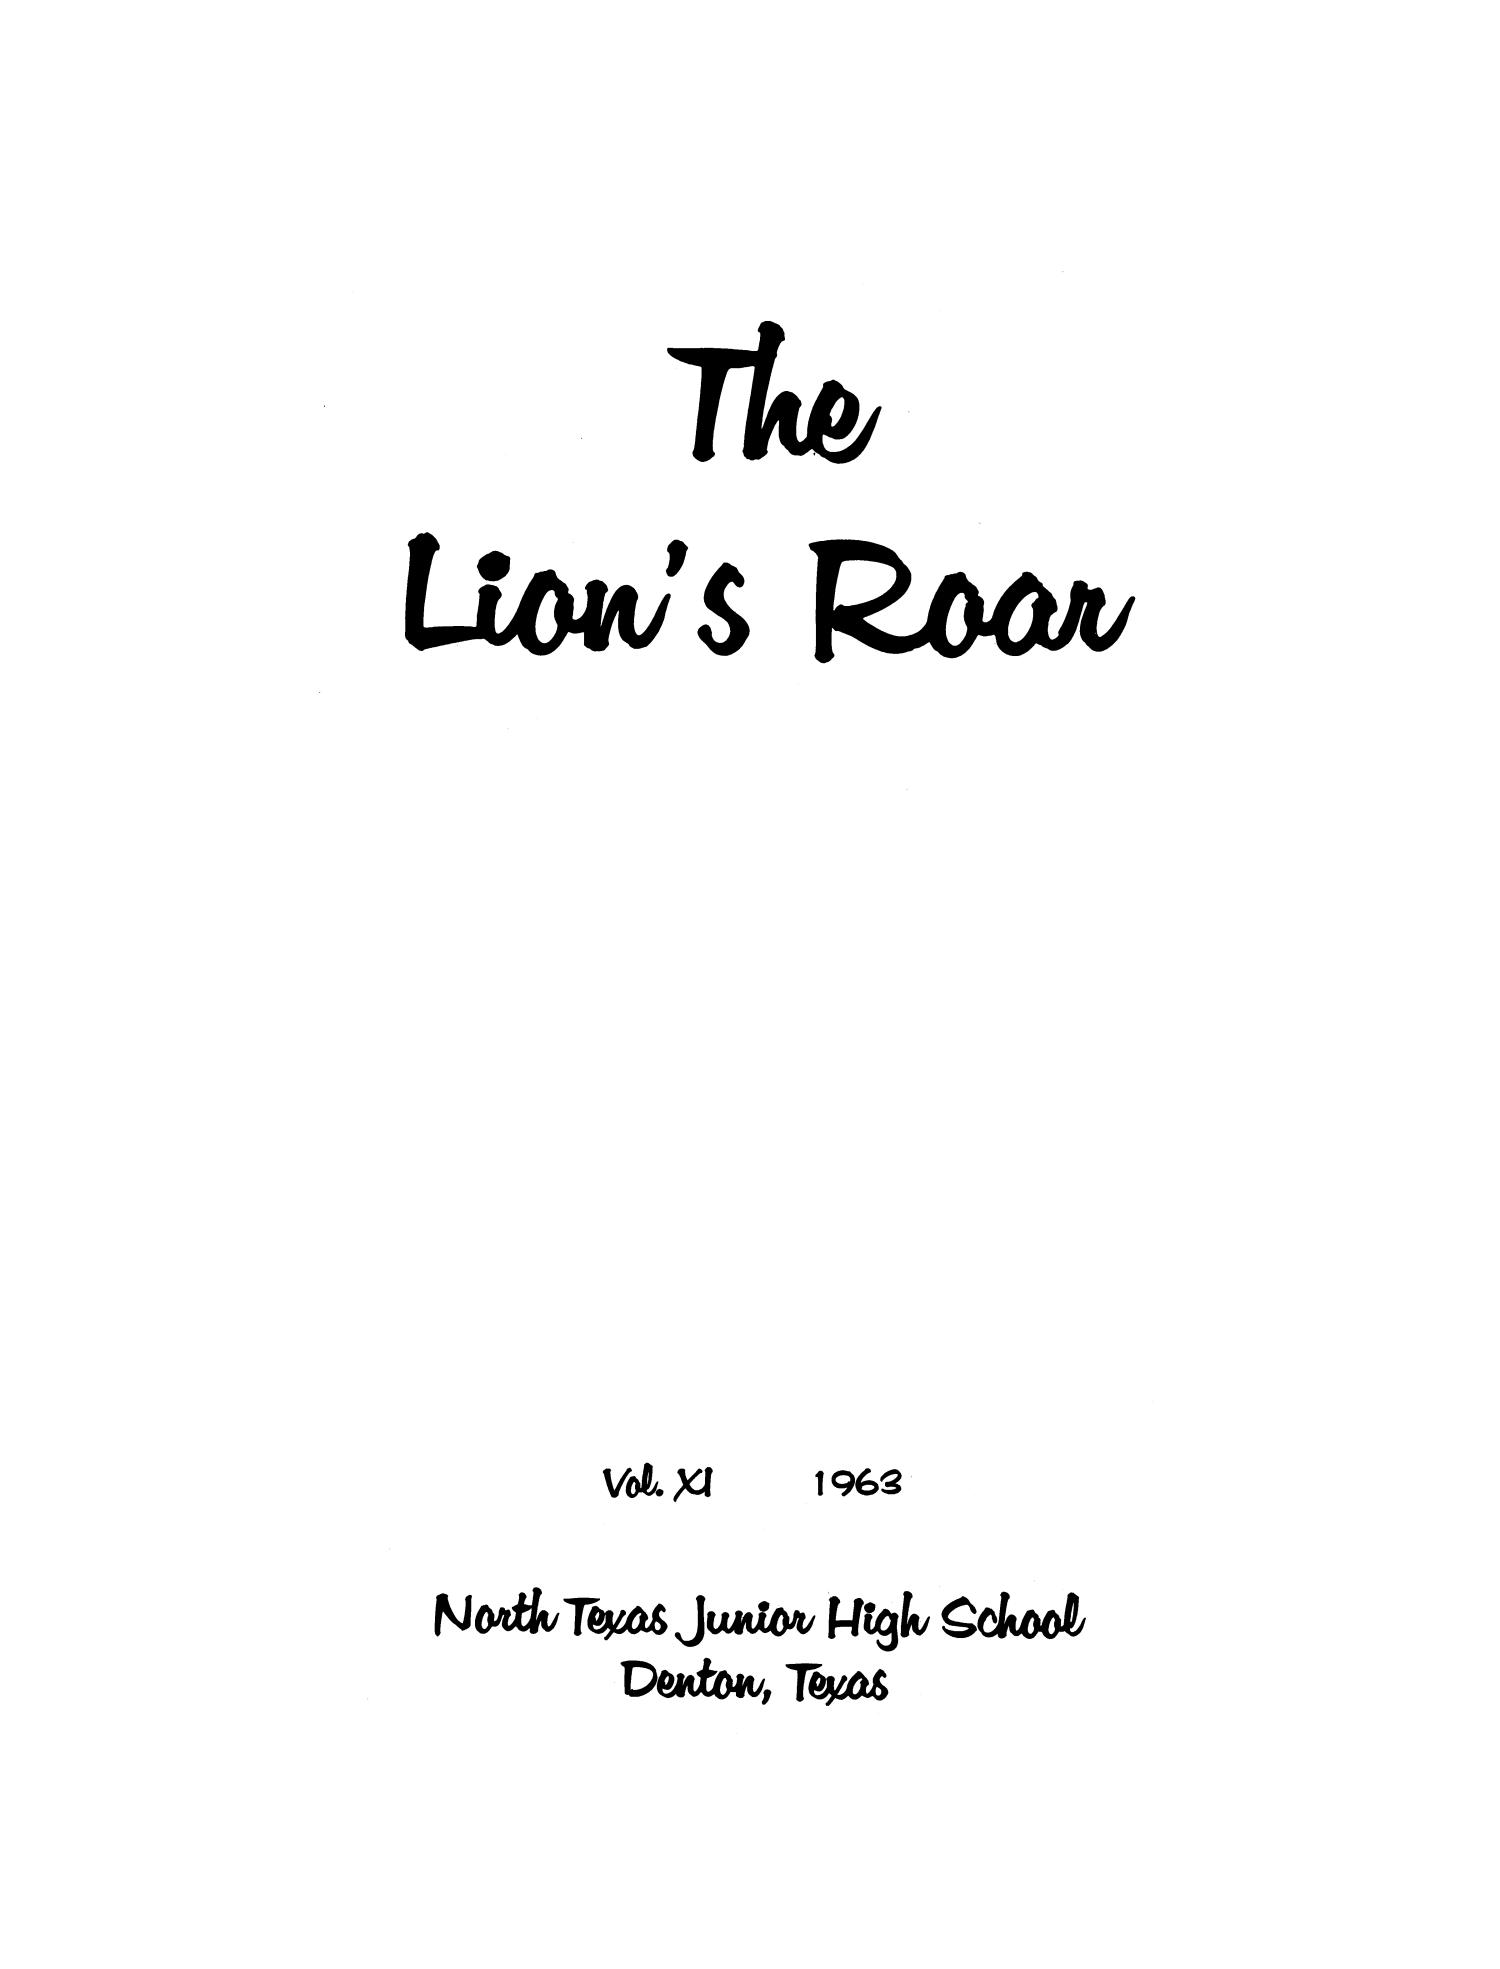 Lion's Roar, Yearbook of the North Texas Junior High School, 1963
                                                
                                                    1
                                                